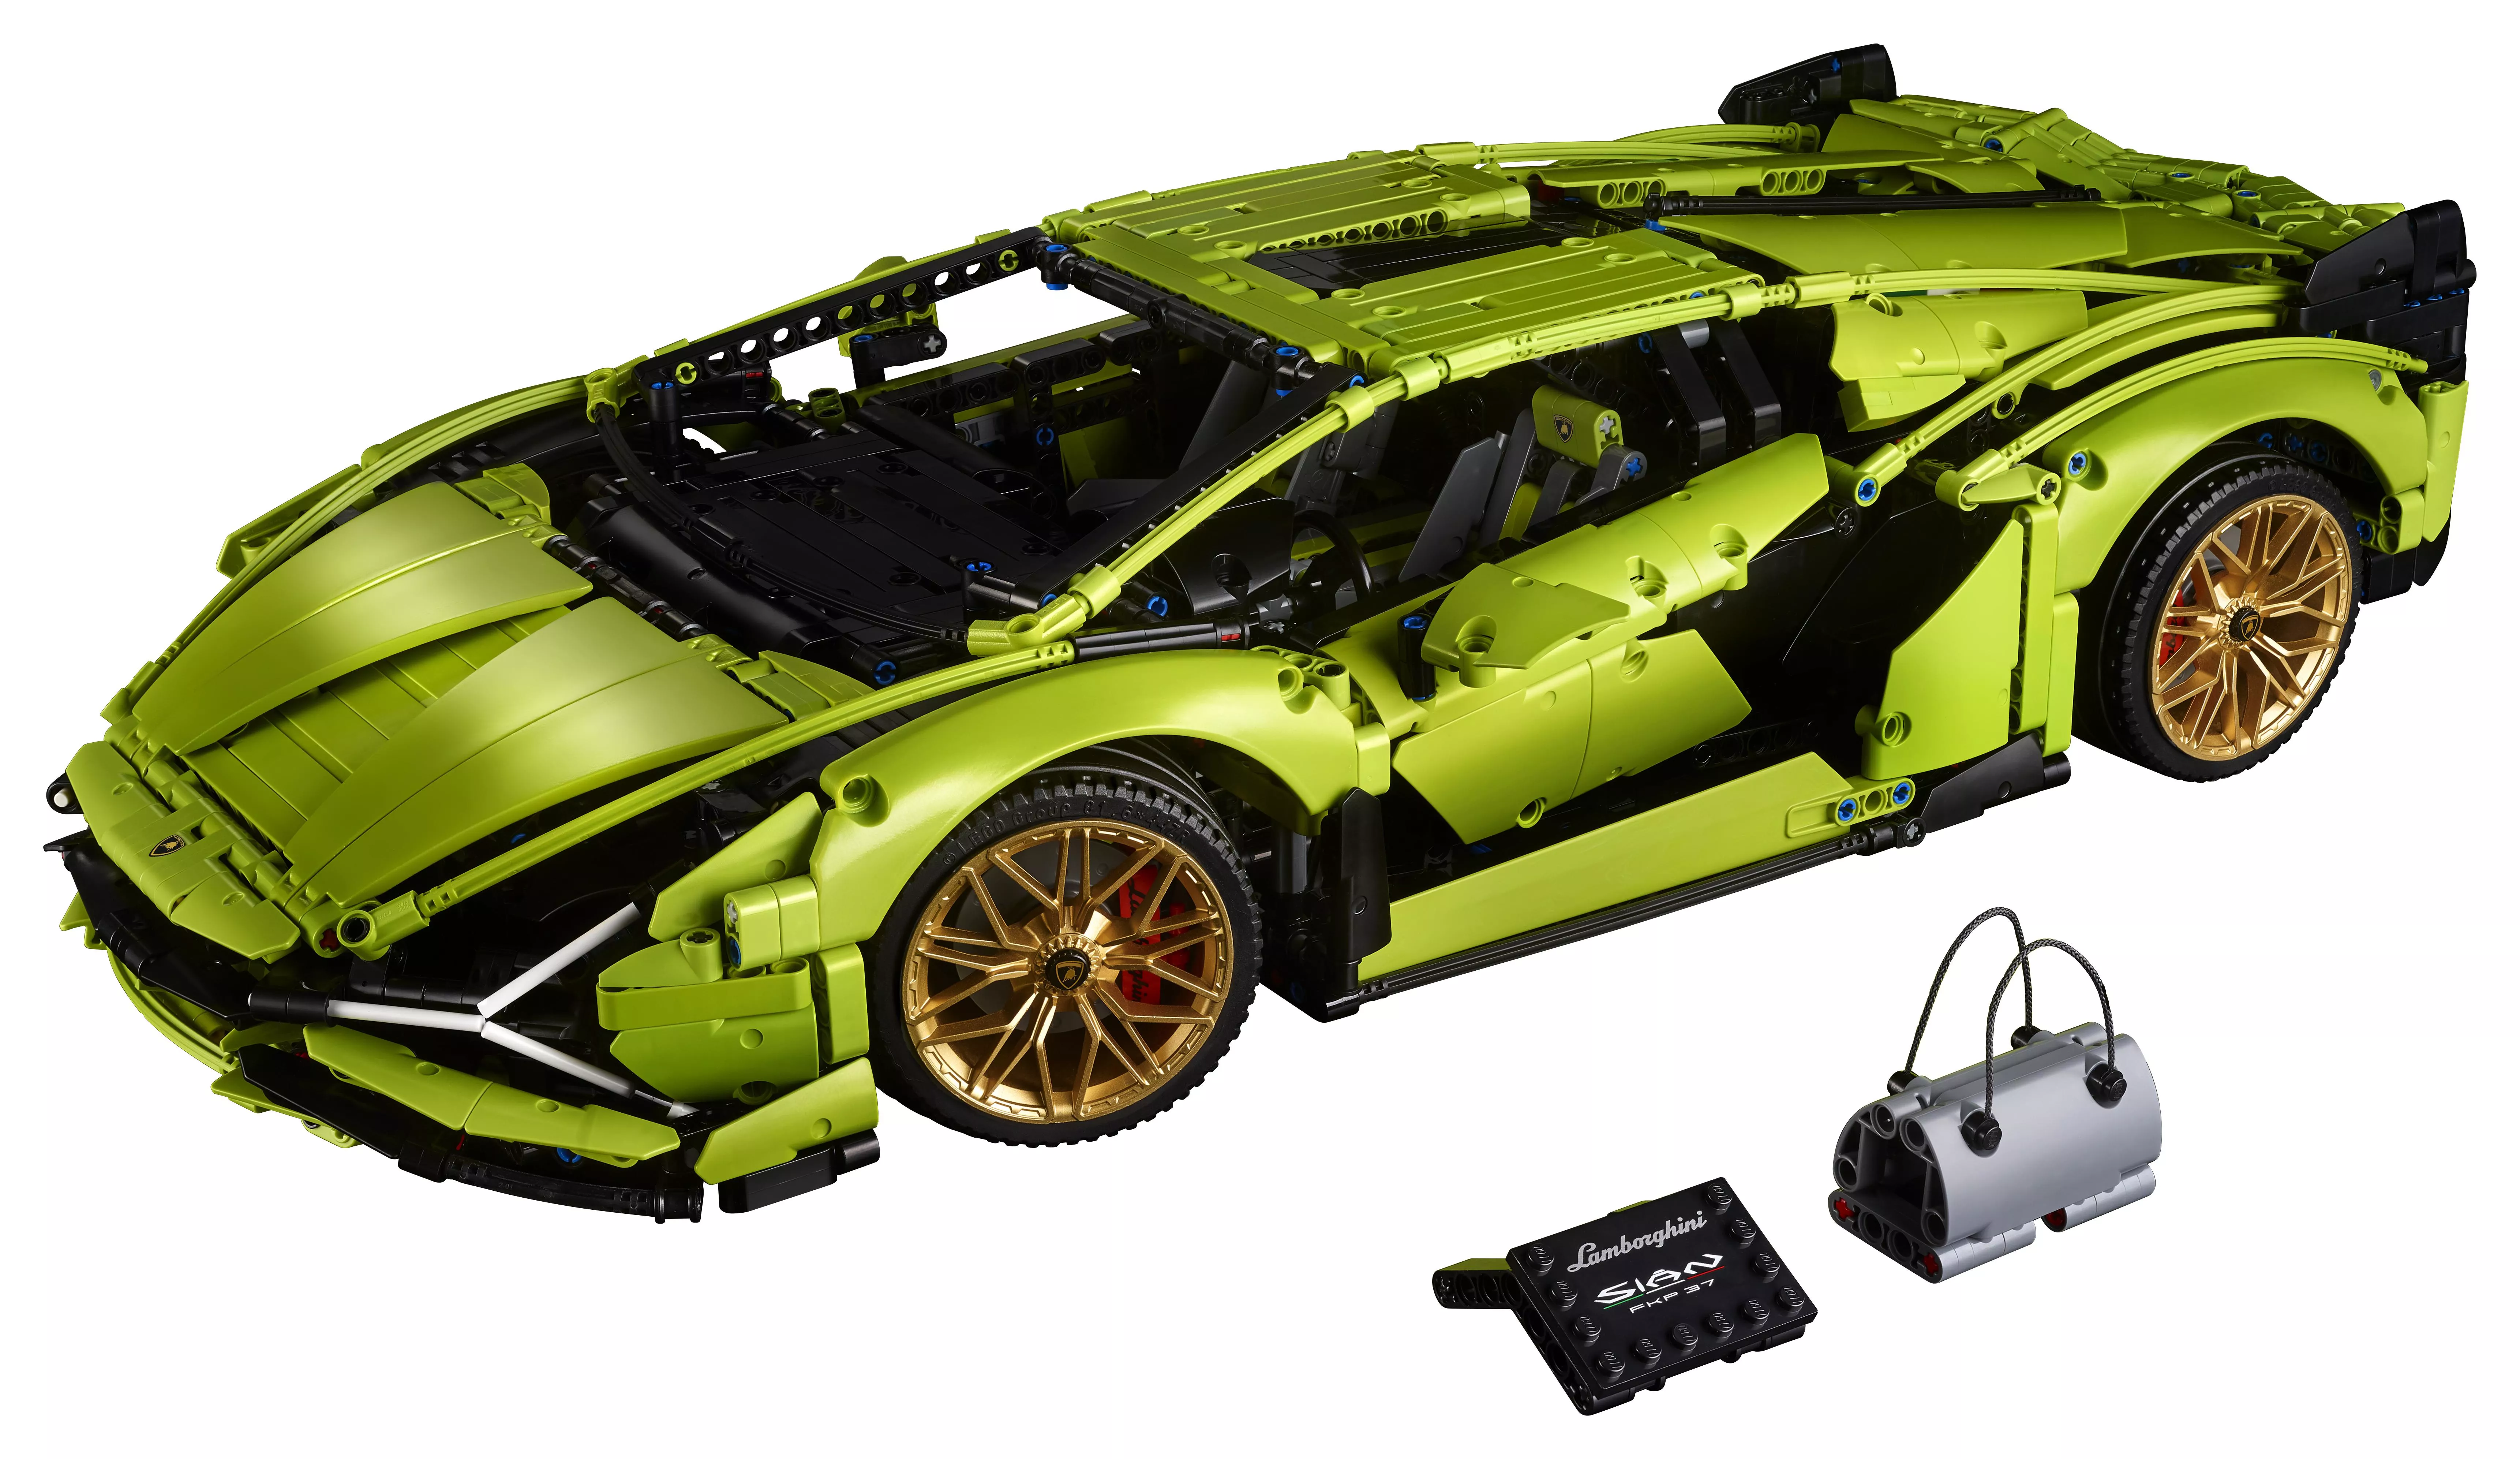 LEGO Technic Lamborghini Sián FKP 37 - 42115